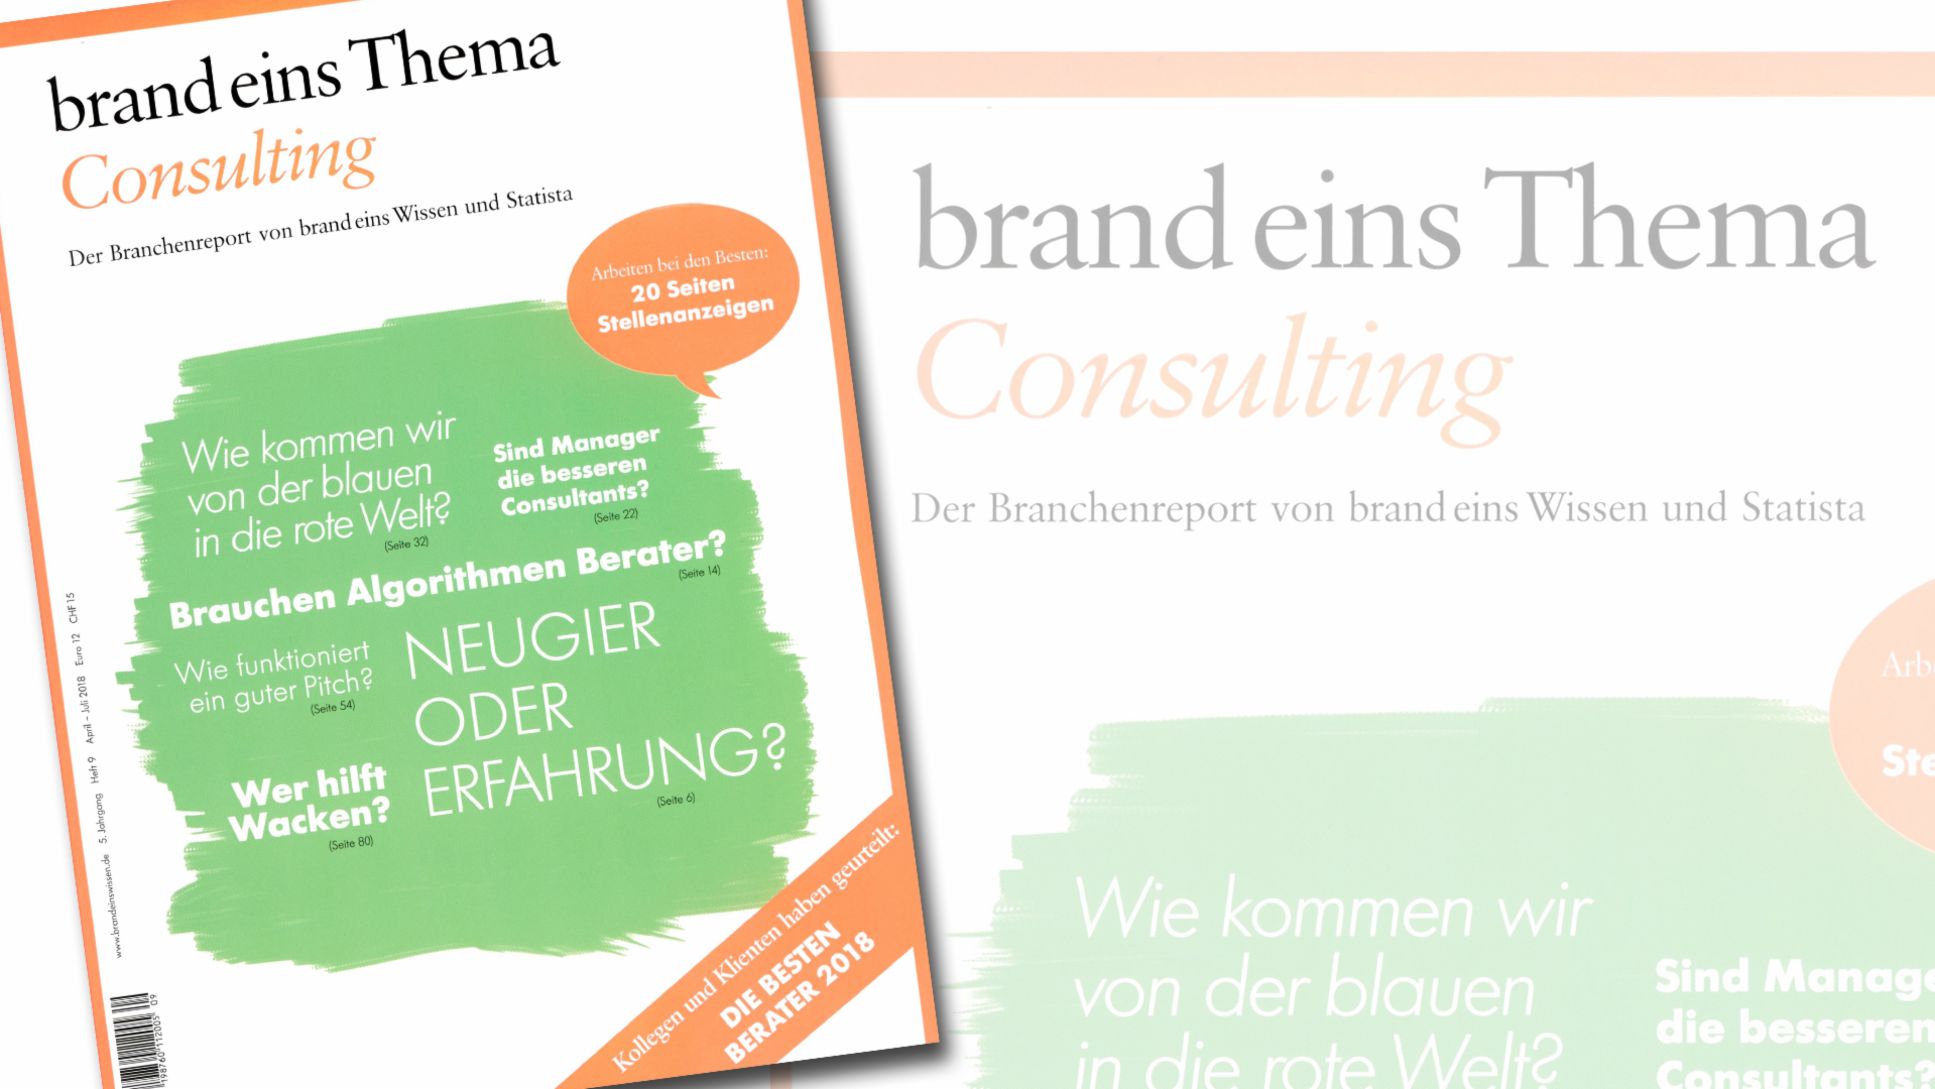 brand eins Thema Consulting, 2018, Porsche Consulting GmbH